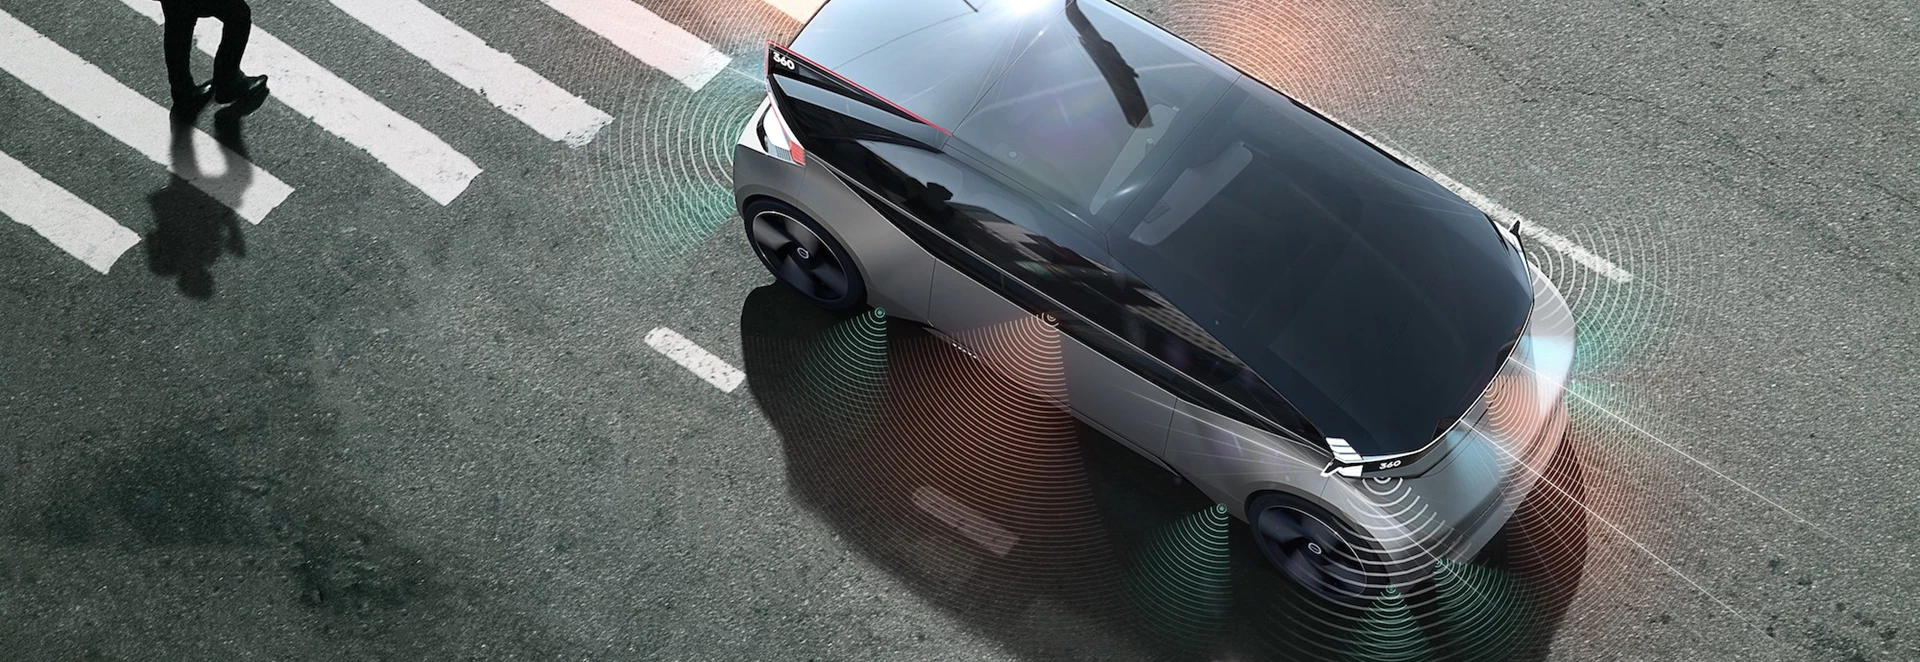 Volvo autonomous concept could end need for short flights